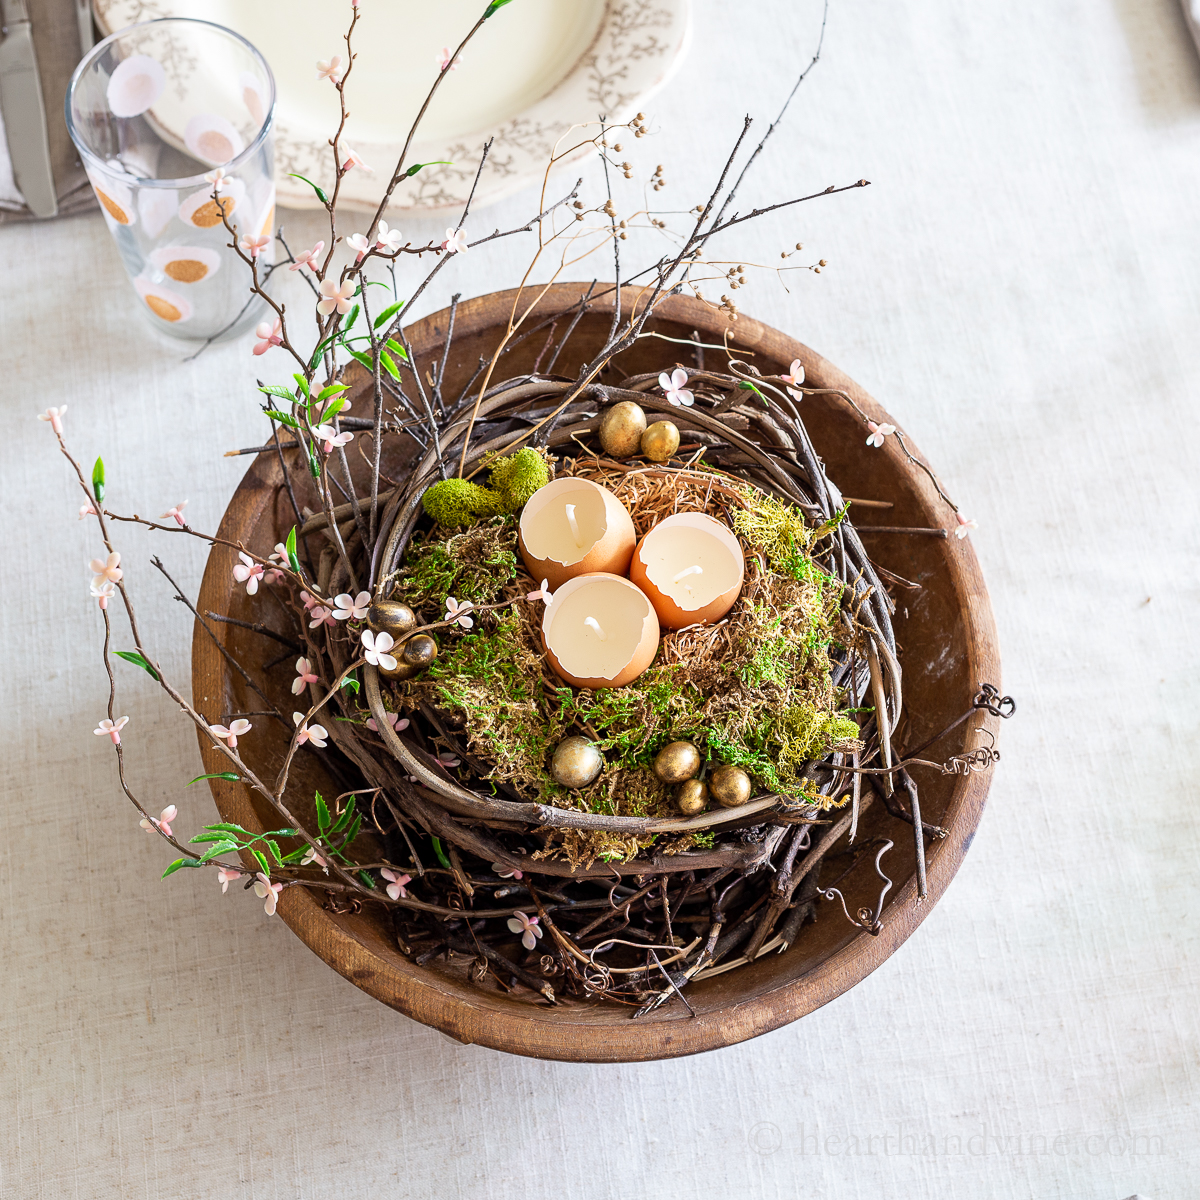 How To Make A DIY Moss Bowl (Easy Spring Home Decor) - Making